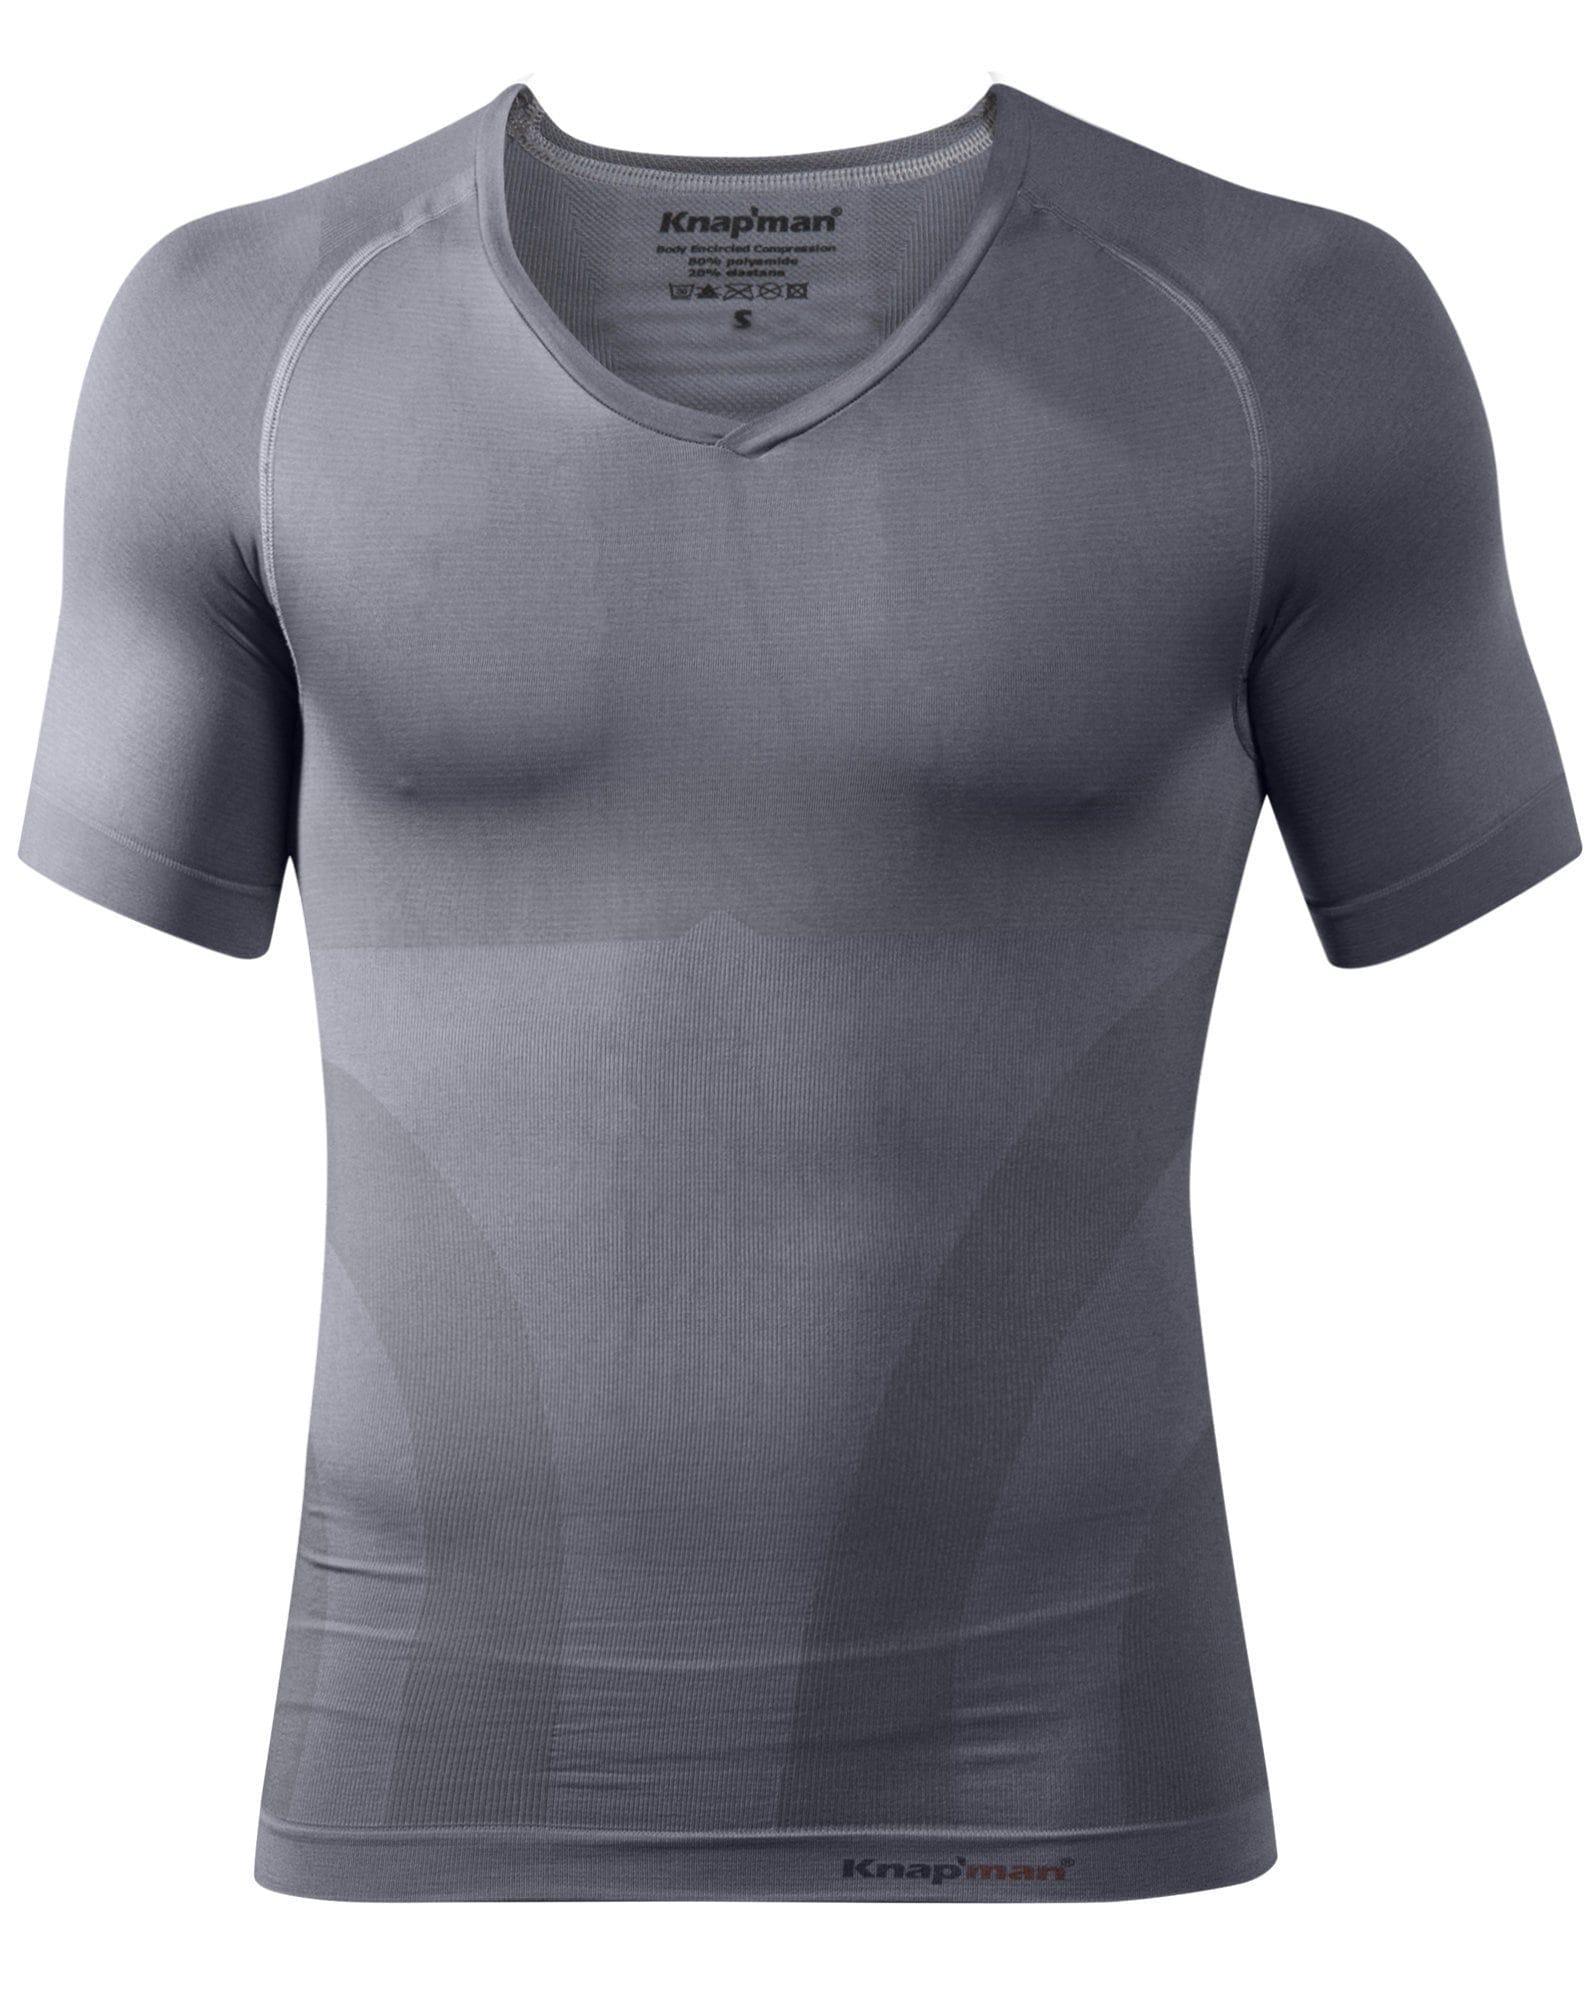 Knap'man Compression Shirt V-Neck Gray